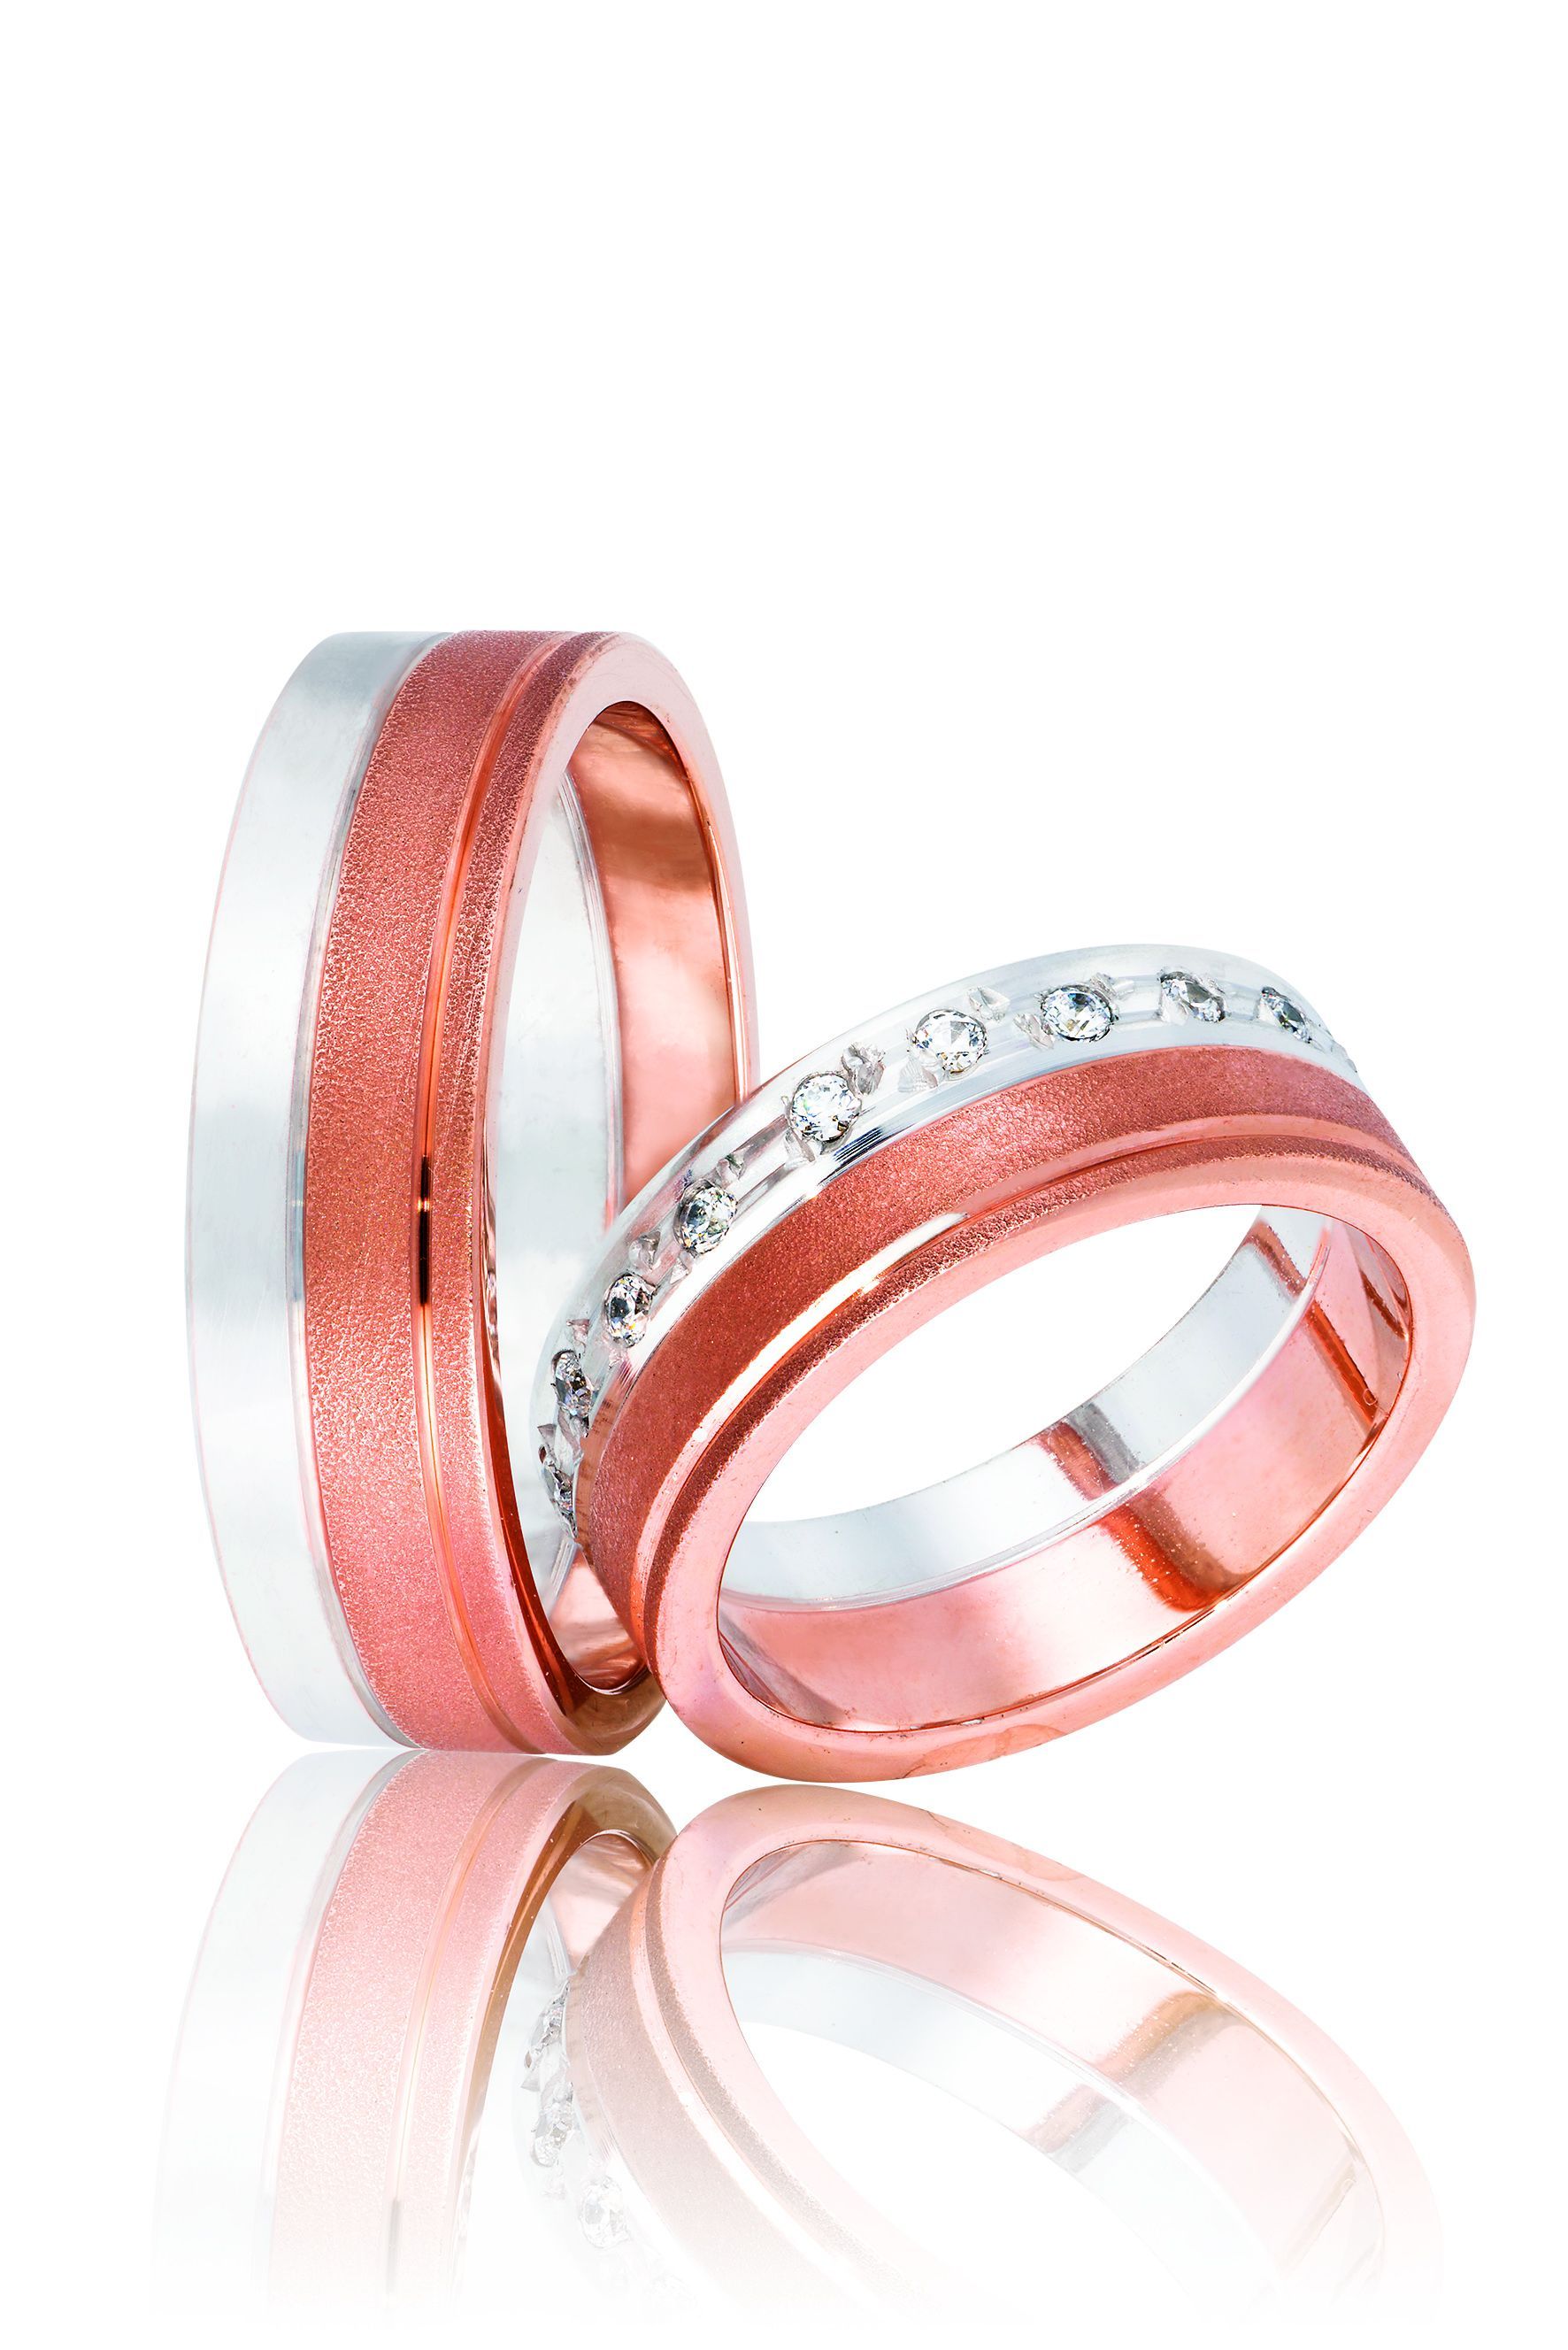 White gold & rose gold wedding rings 6.5mm(code 1Wr)